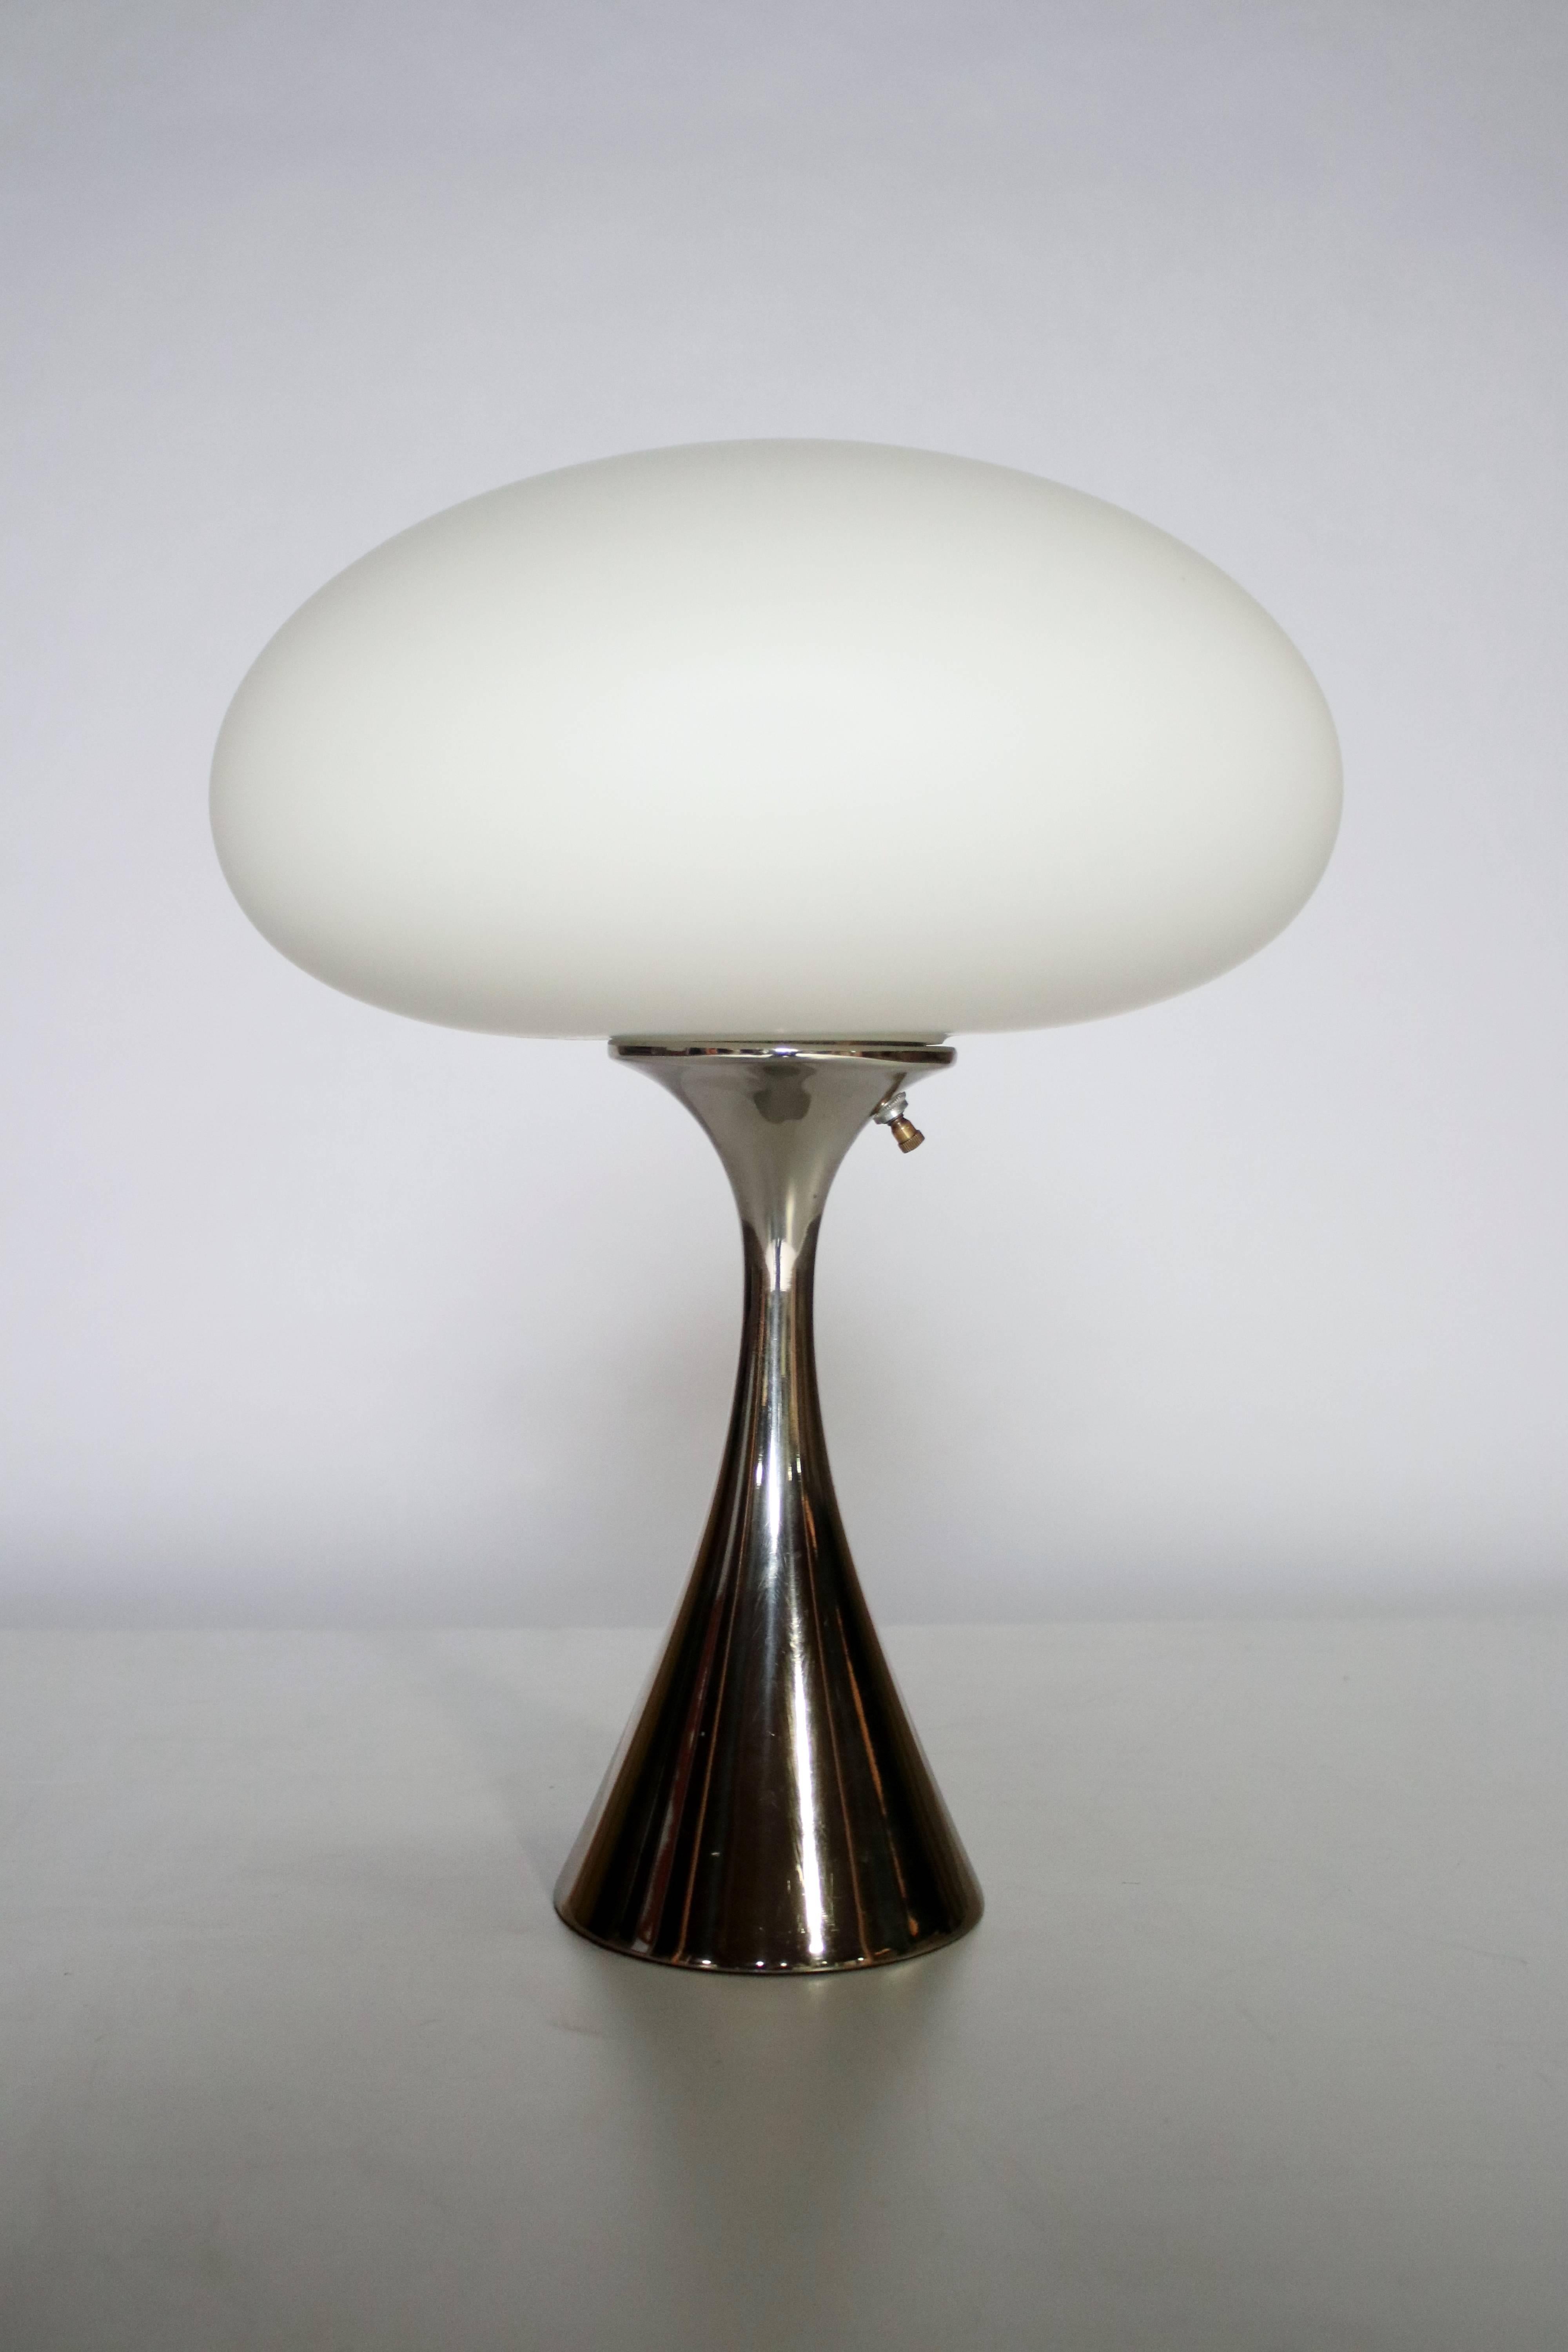 bill curry mushroom lamp